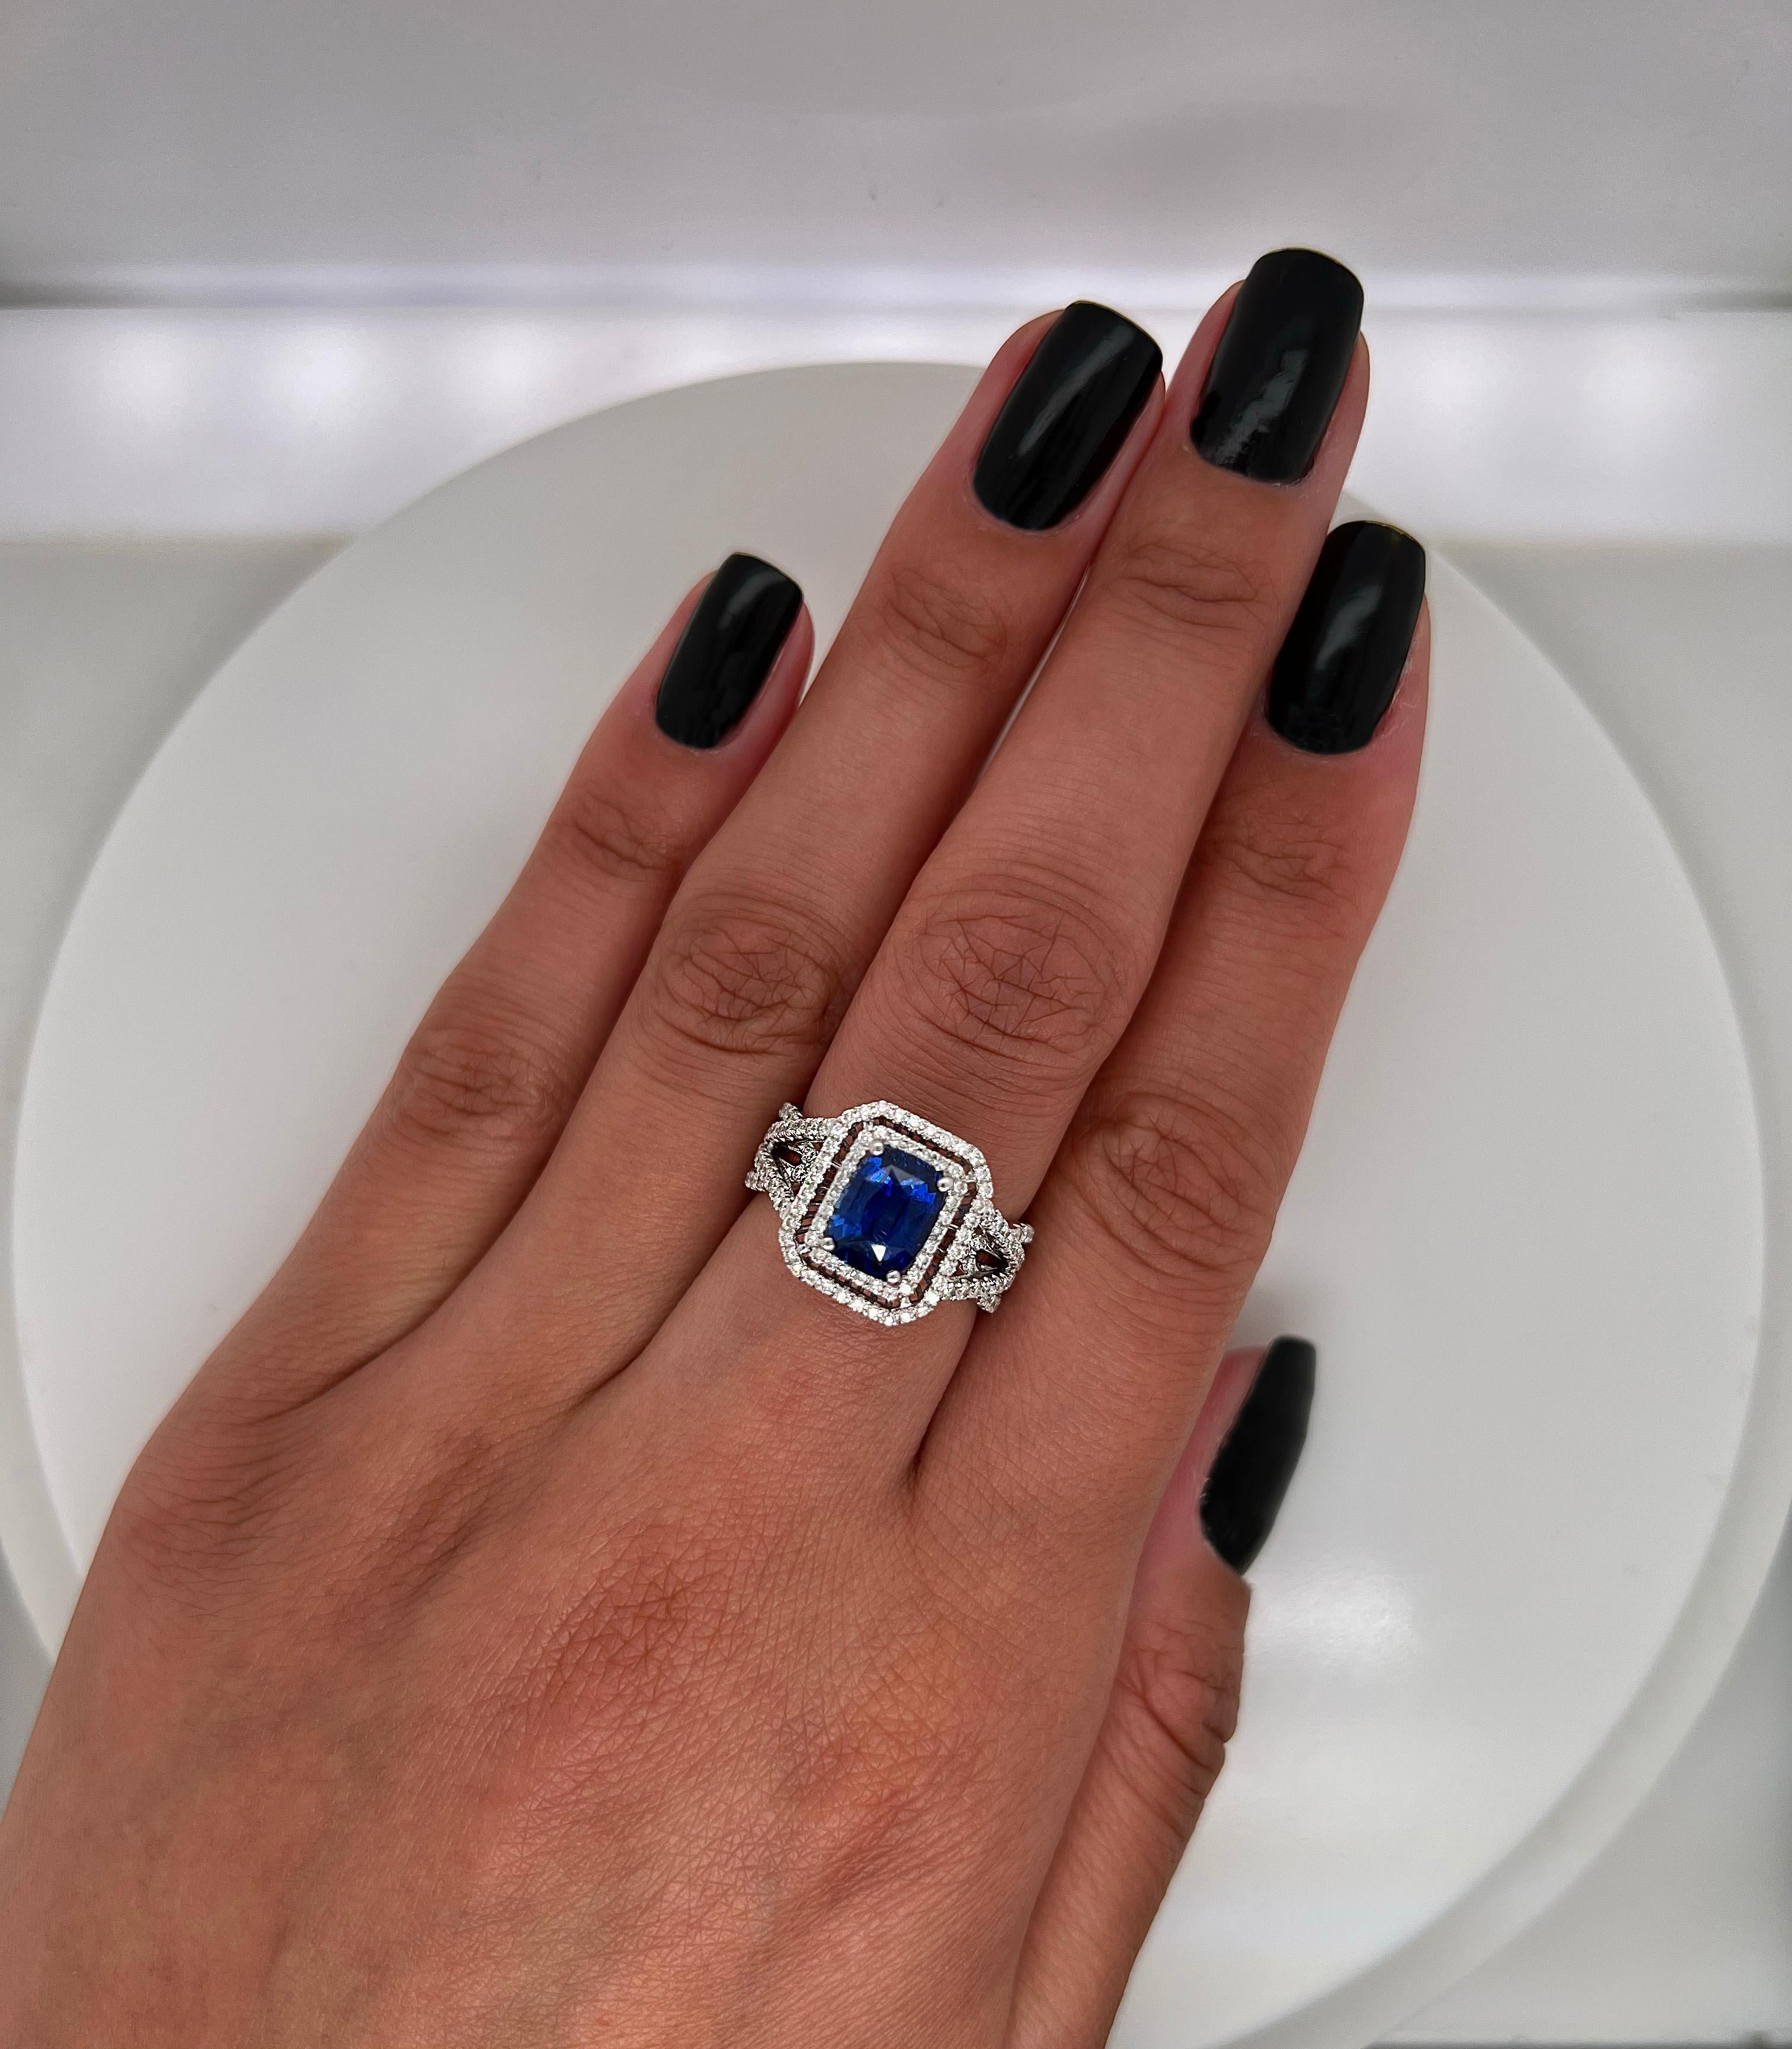 Cushion Cut 3.11 Total Carat Sapphire Diamond Engagement Ring For Sale